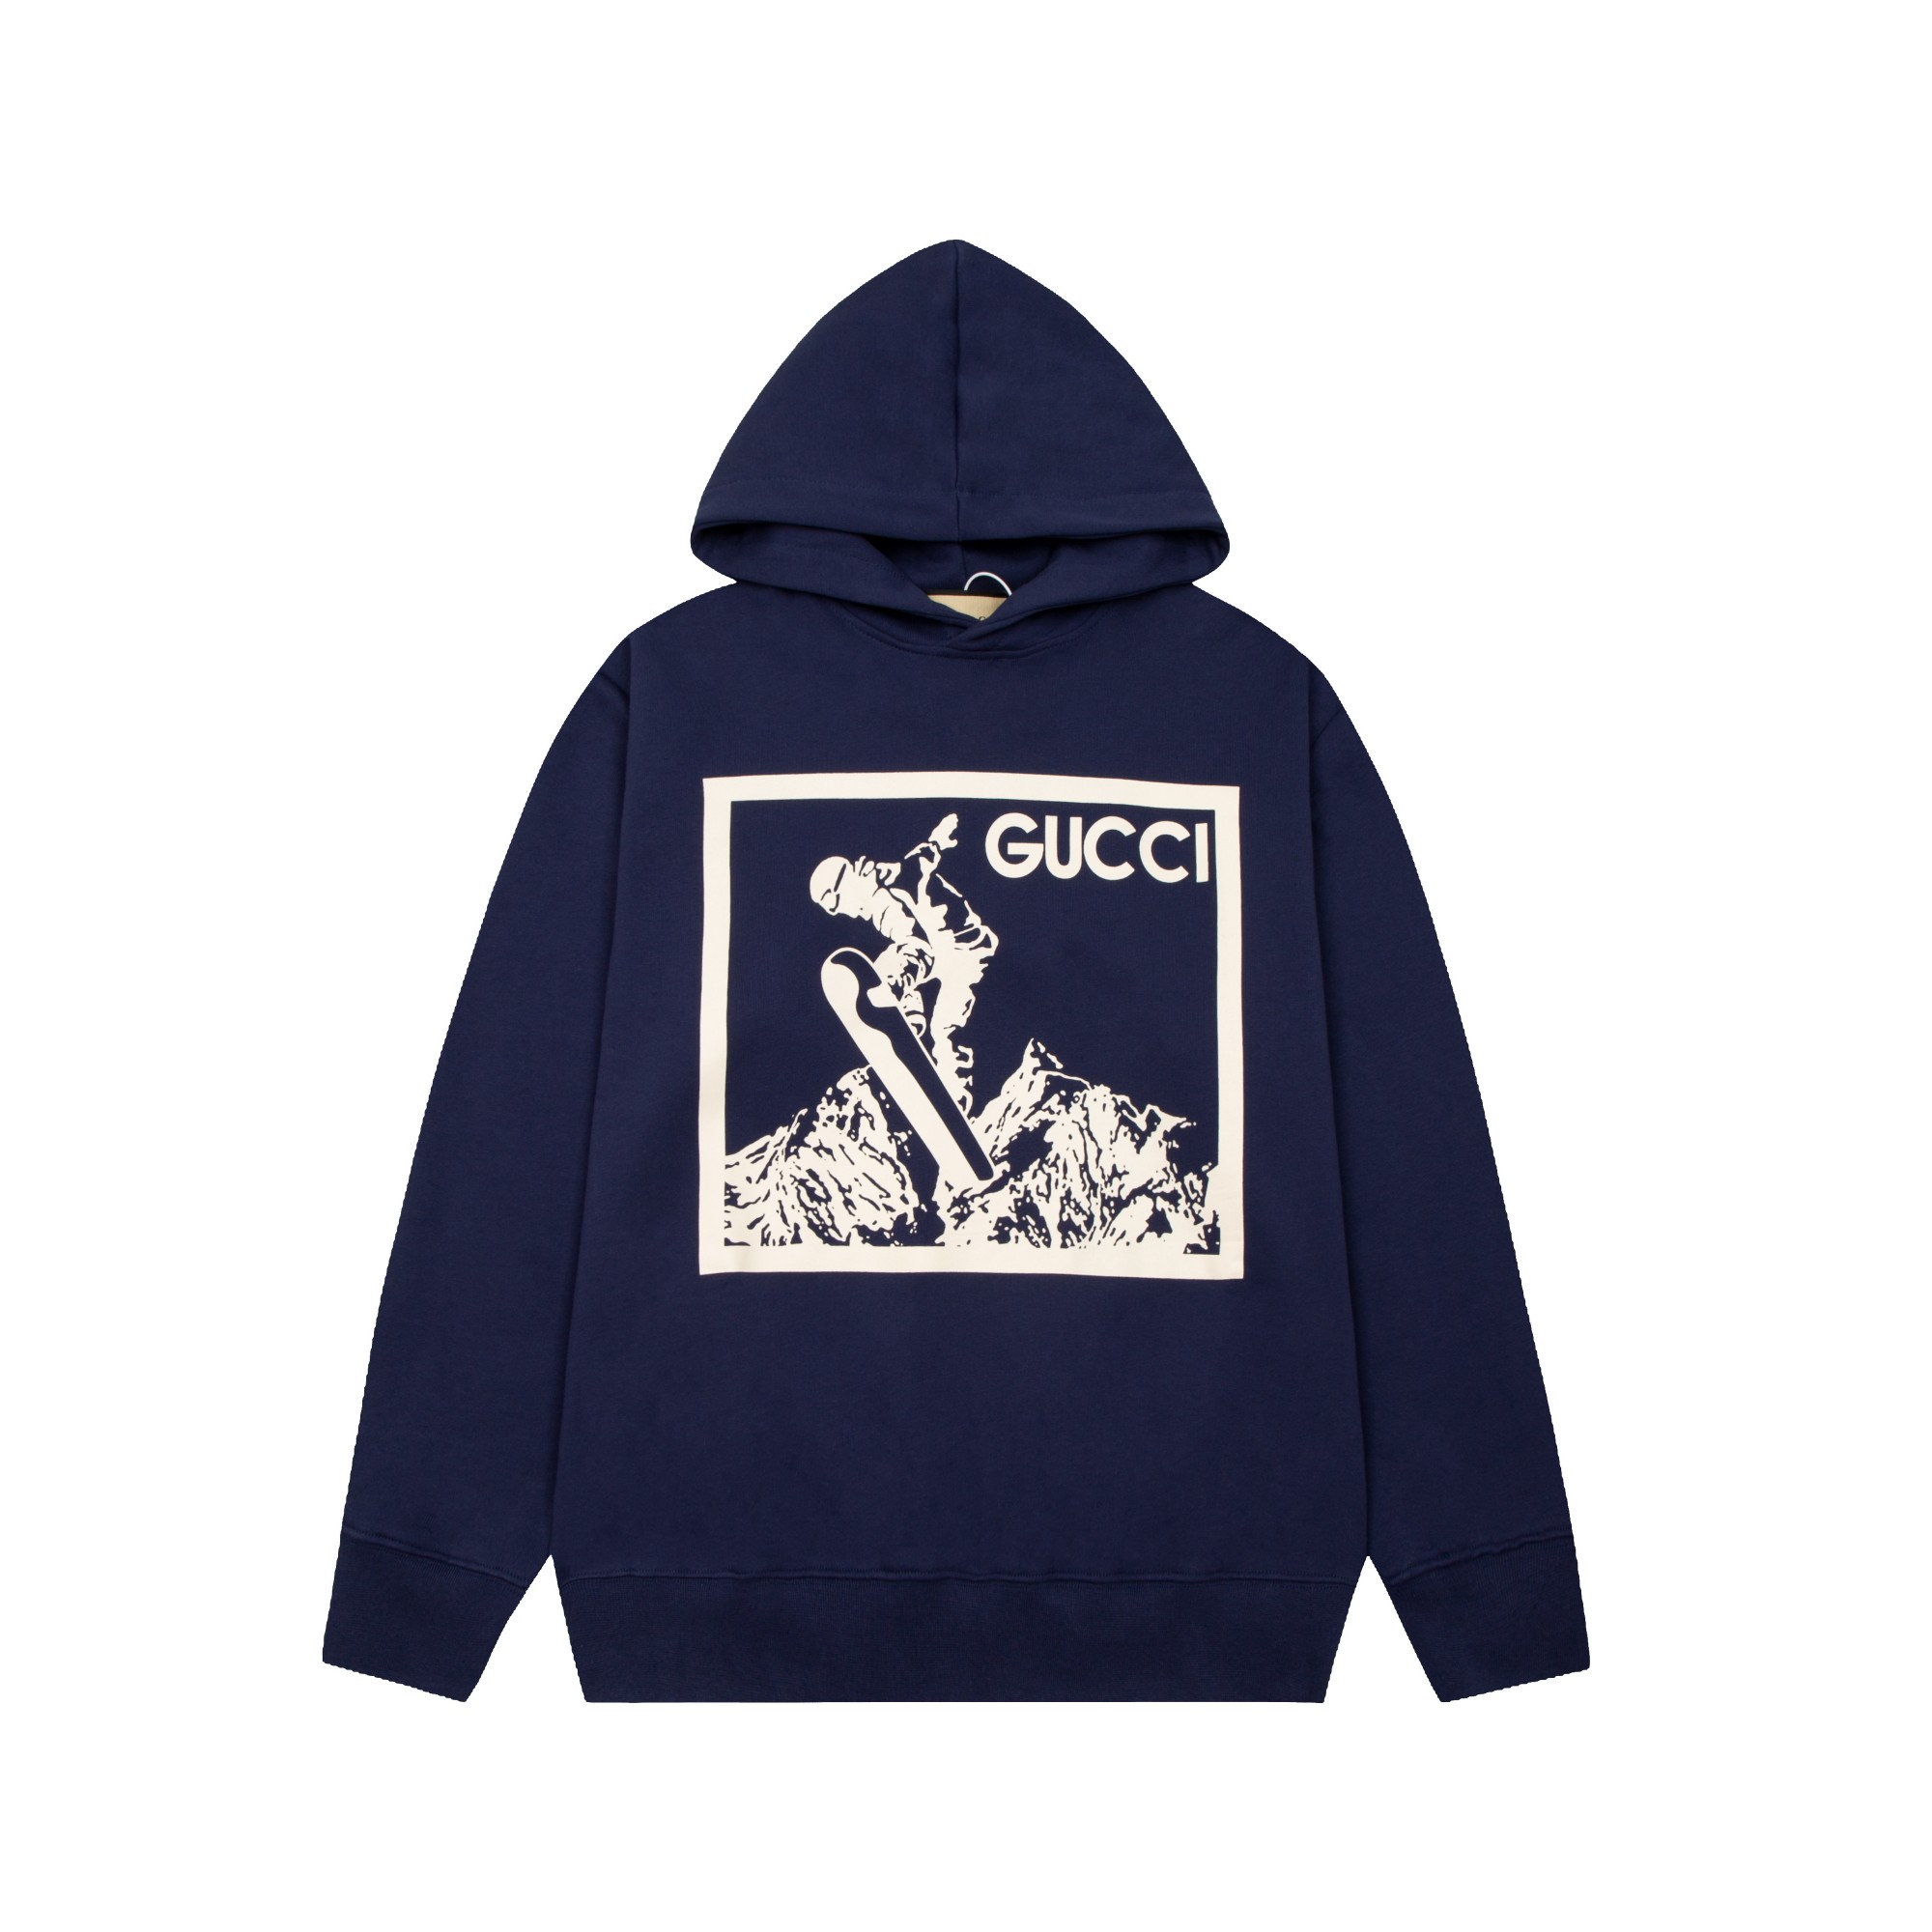 Gucci 24ss latest ski hooded sweatshirt